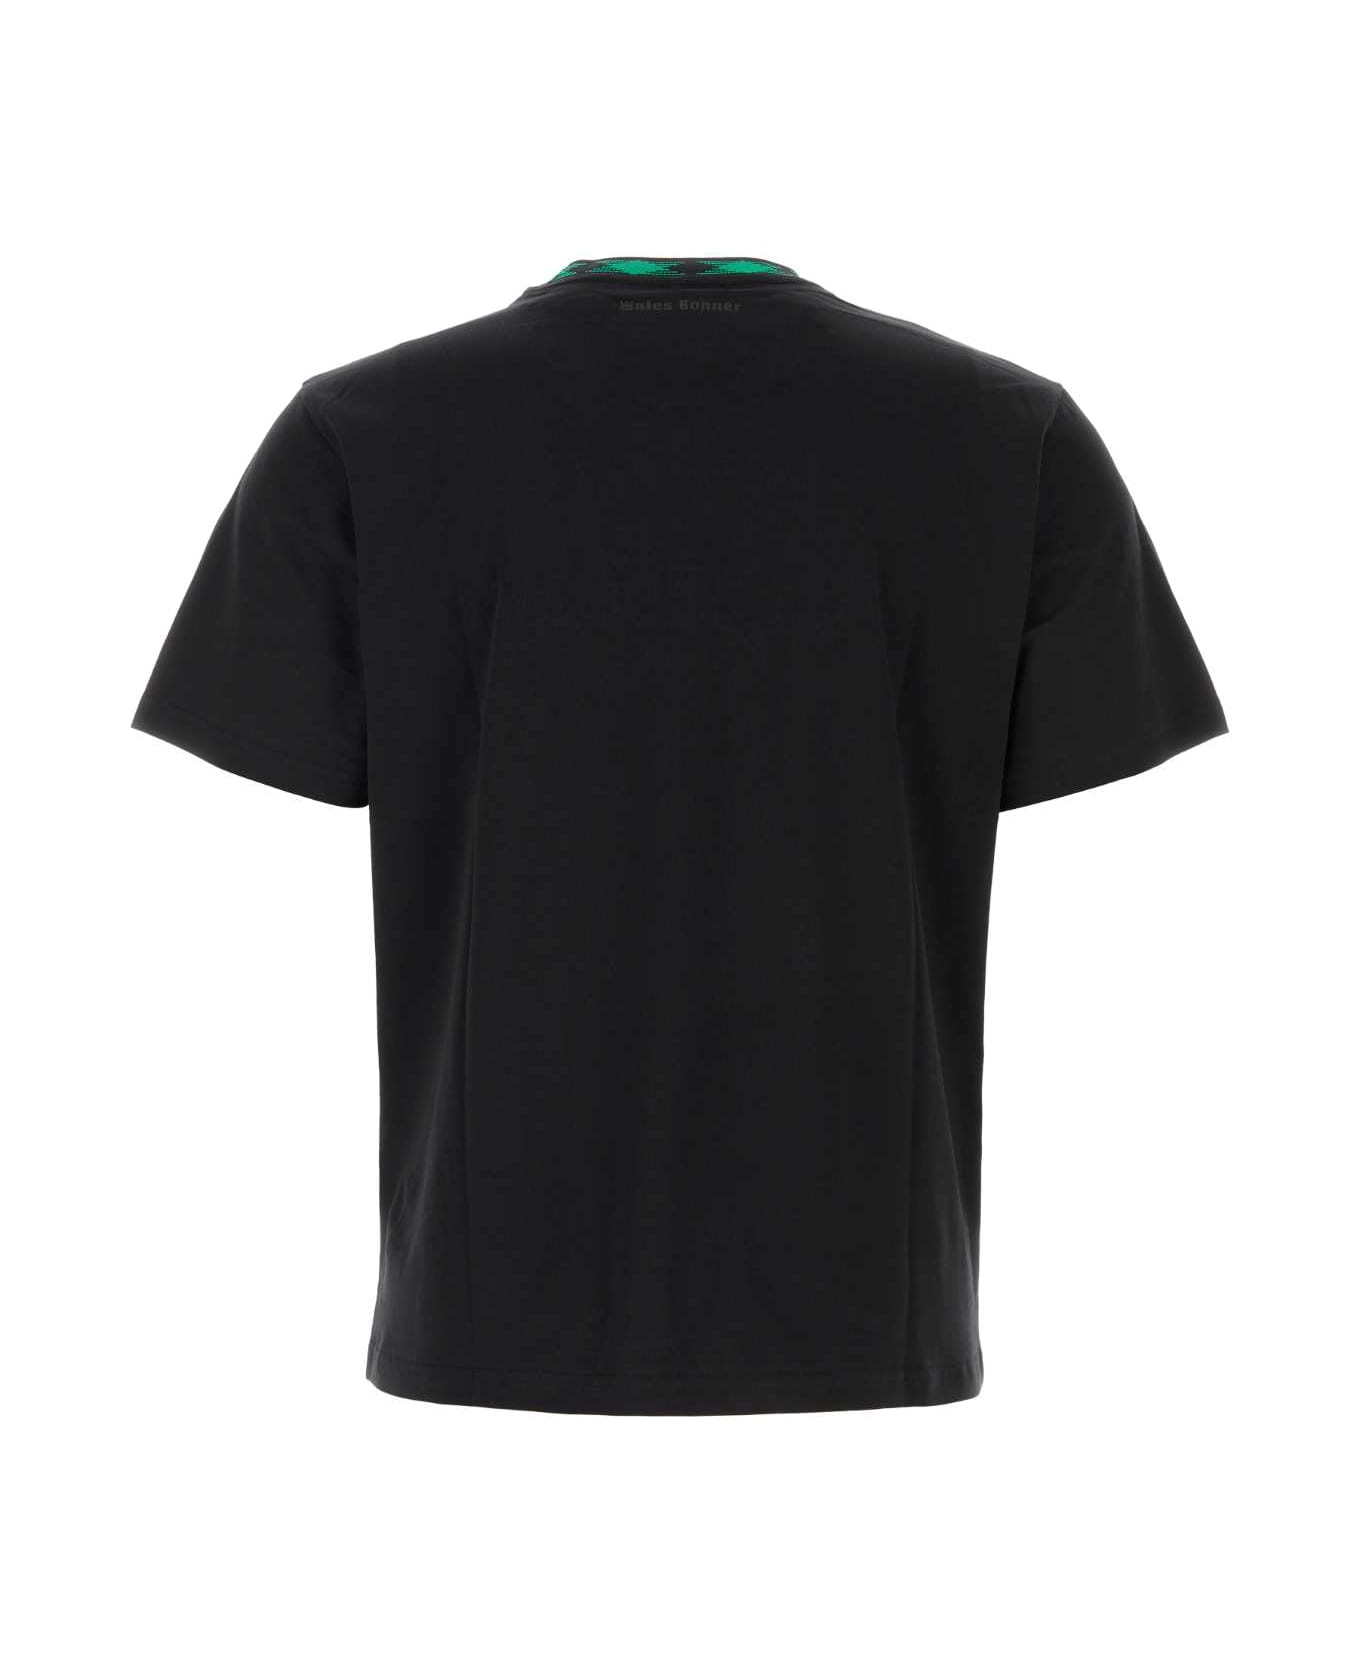 Wales Bonner Black Cotton Original T-shirt - BLACK シャツ